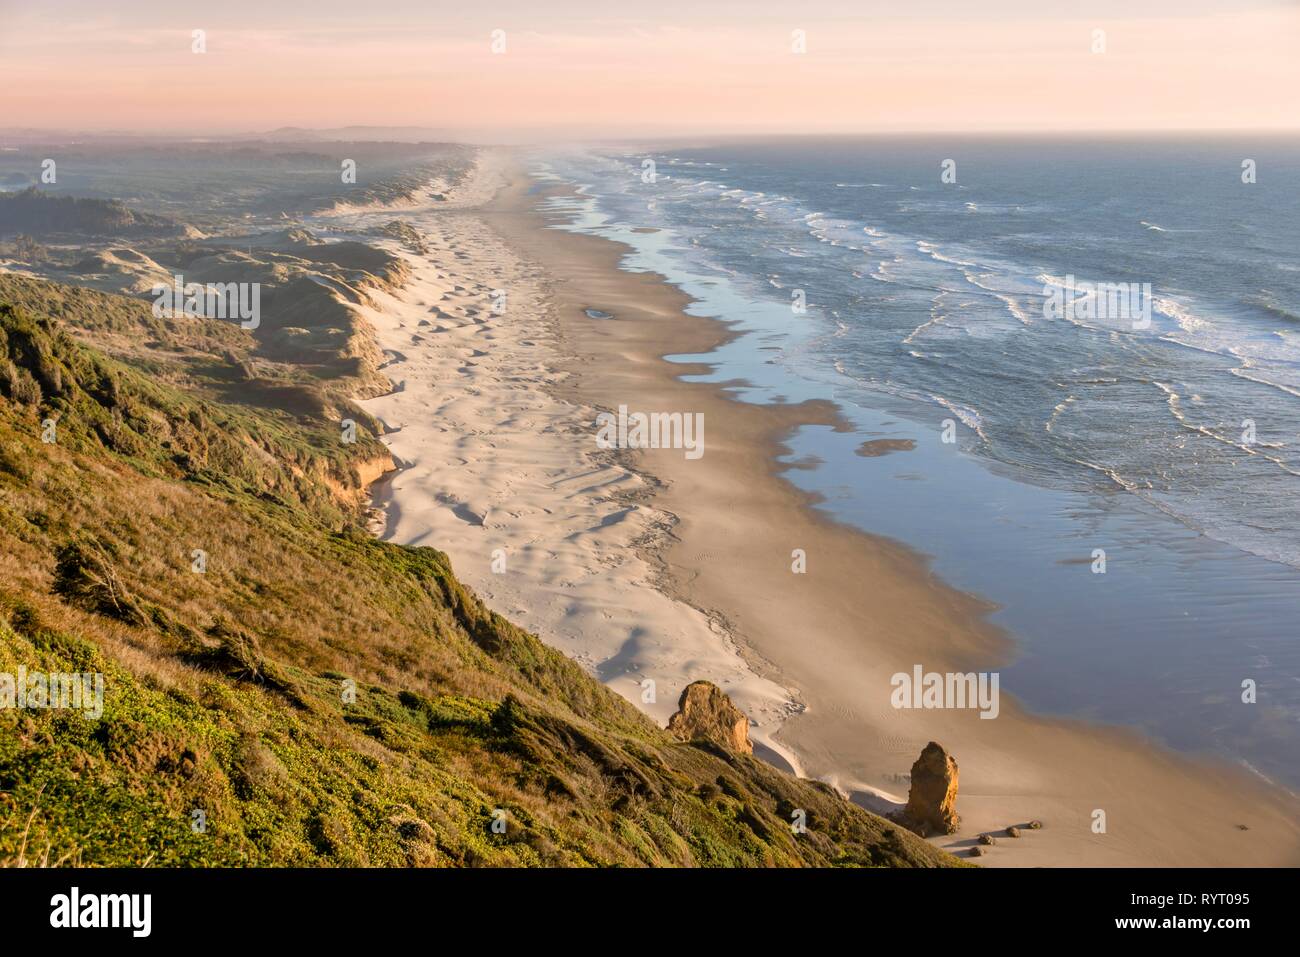 View over Baker Beach, coastal landscape with long sandy beach and dunes, Oregon Coast Highway, Oregon, USA Stock Photo